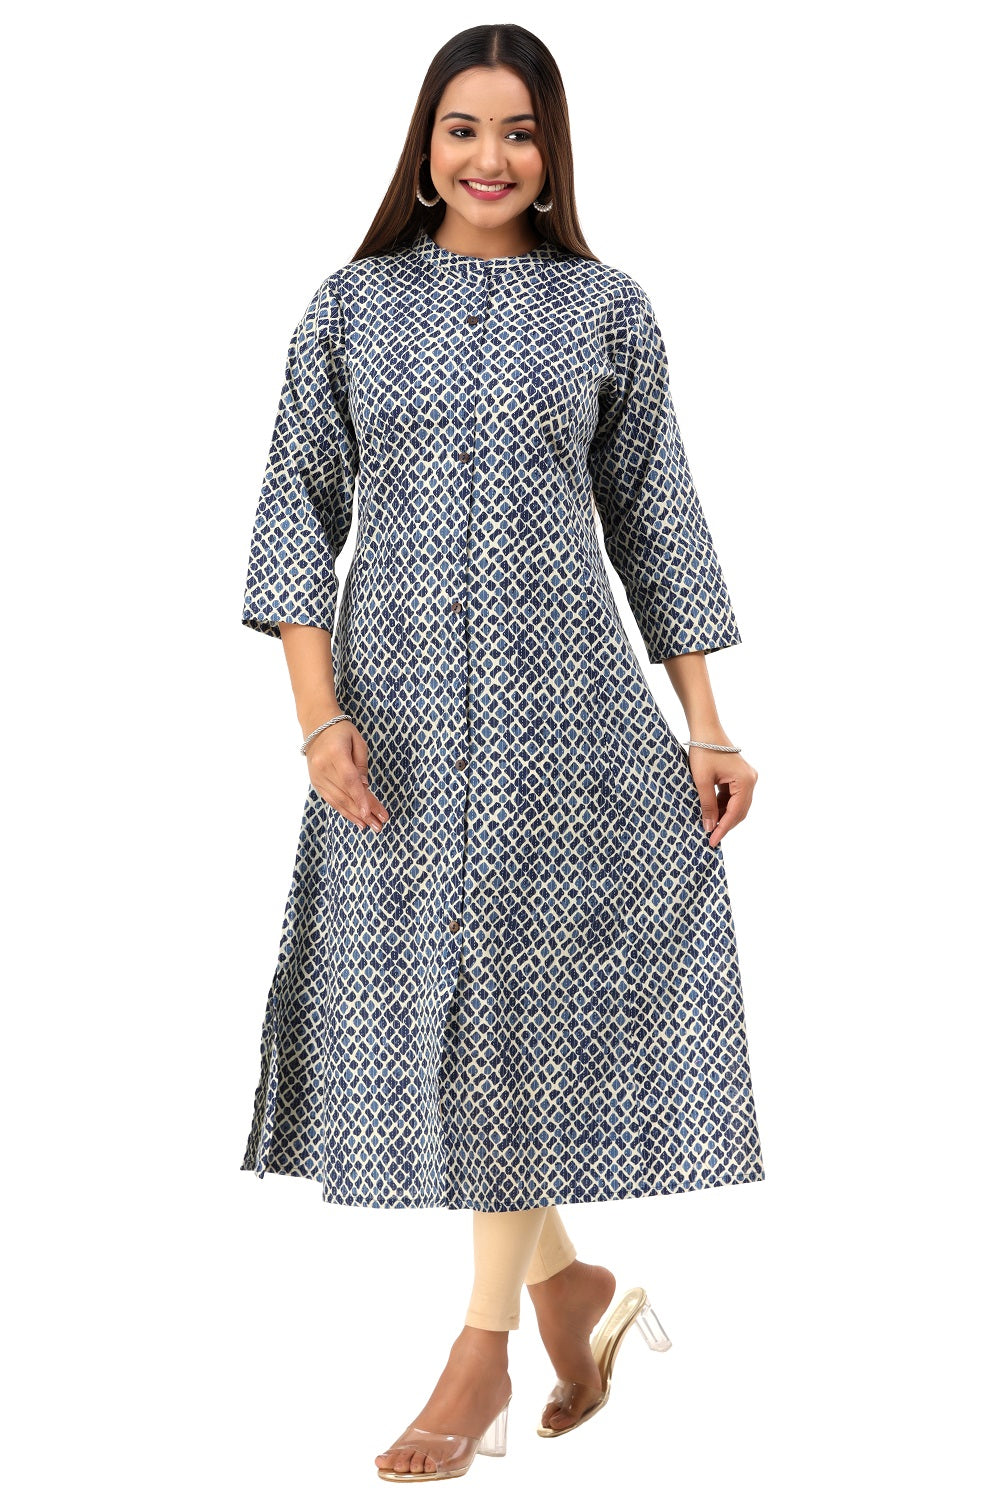 Indigo kantha A- line cotton kurta clothes for women